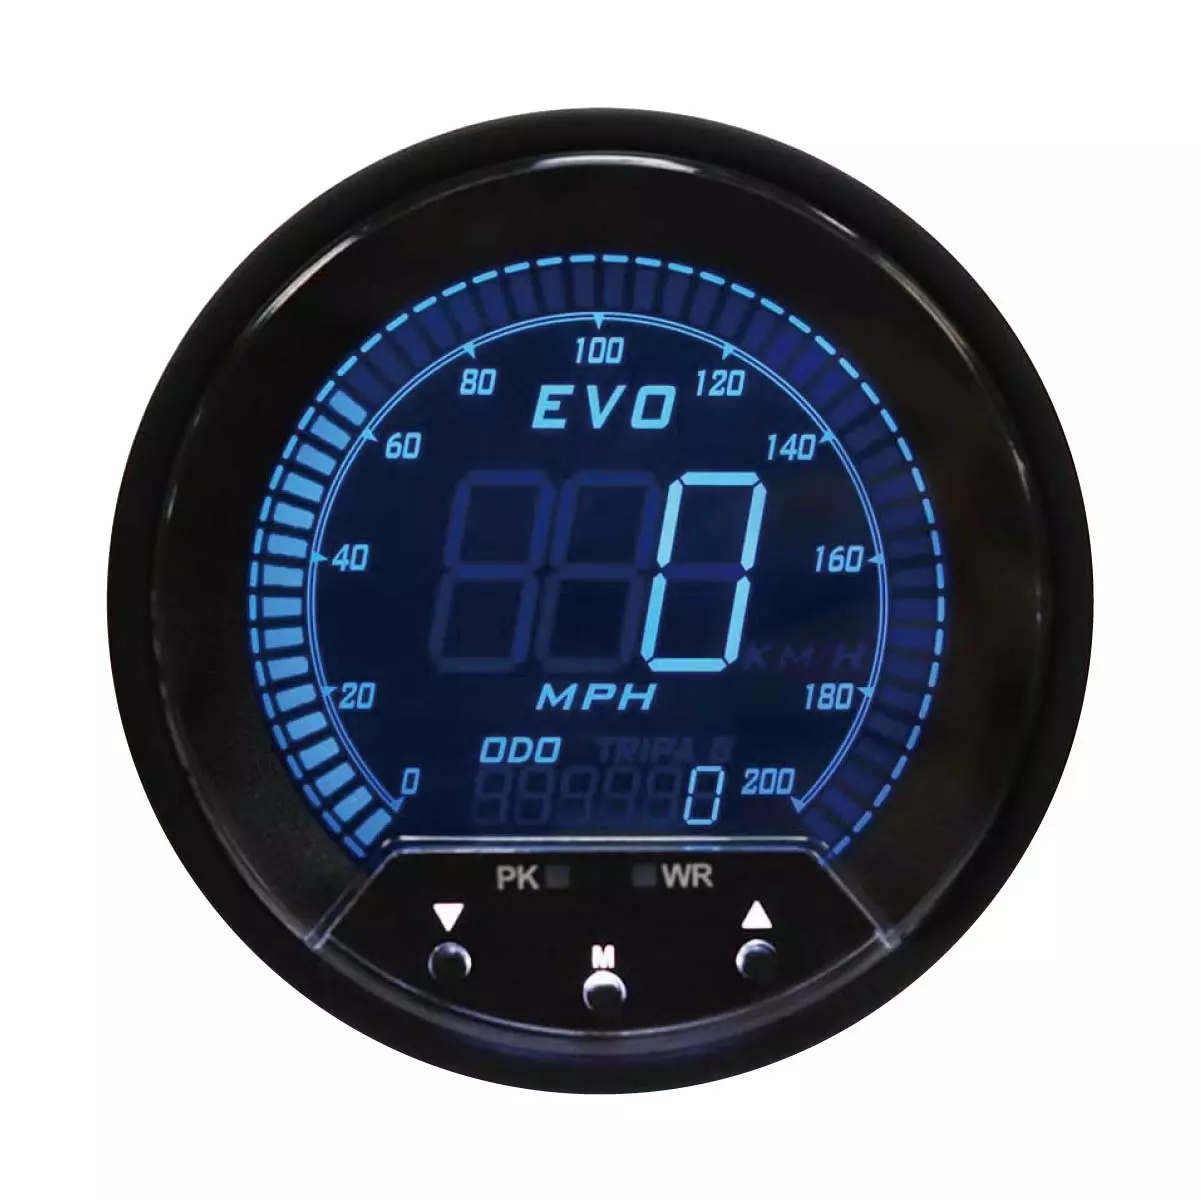 MOTOR METER RACING EVO Series Speedometer MPH Blue Red White Green Backlit Warning Function Peack Recall Included GPS Sensor